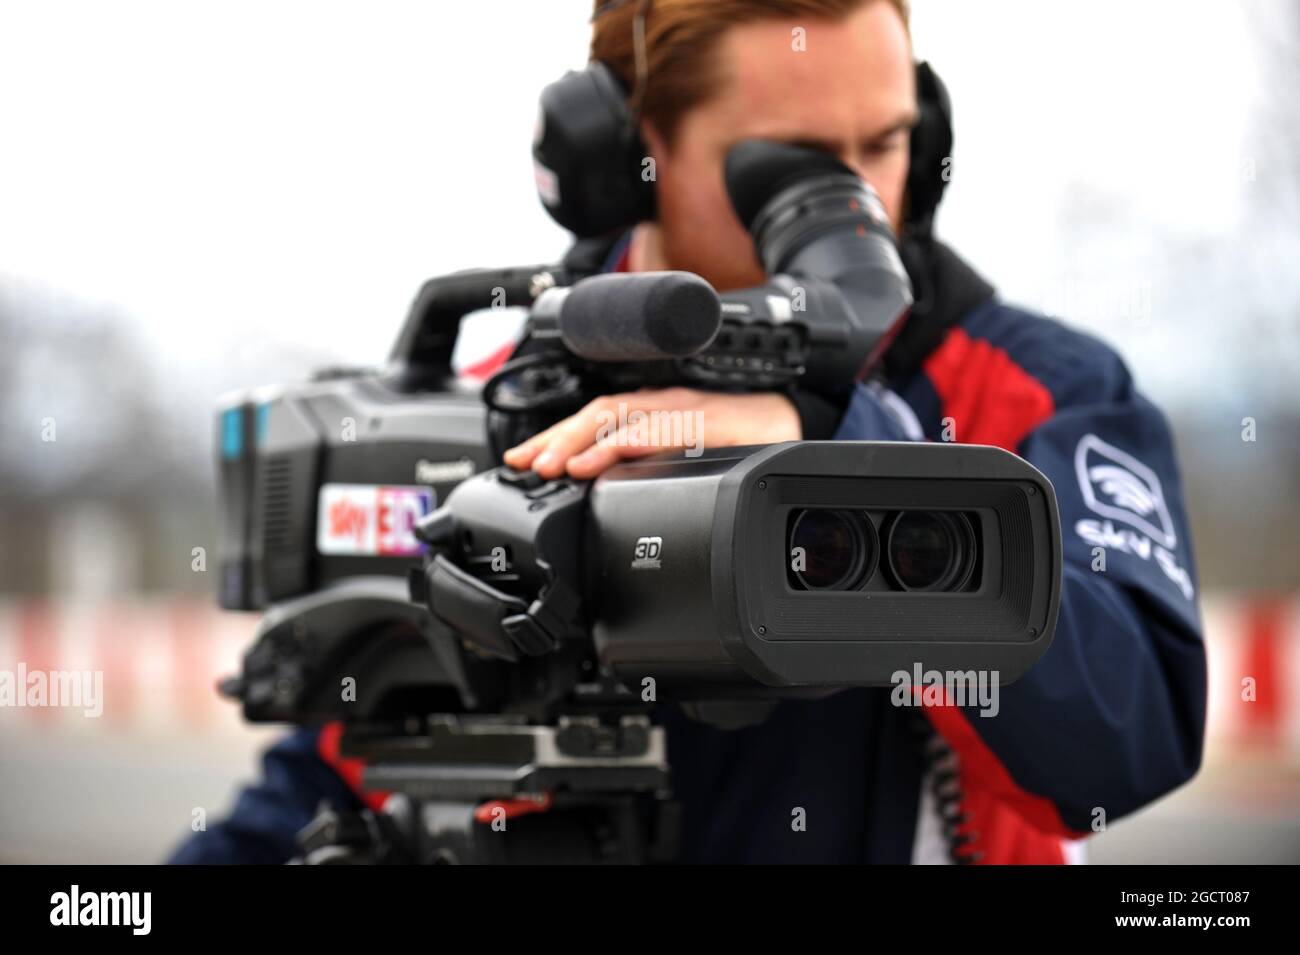 Sky F1 3D cameraman